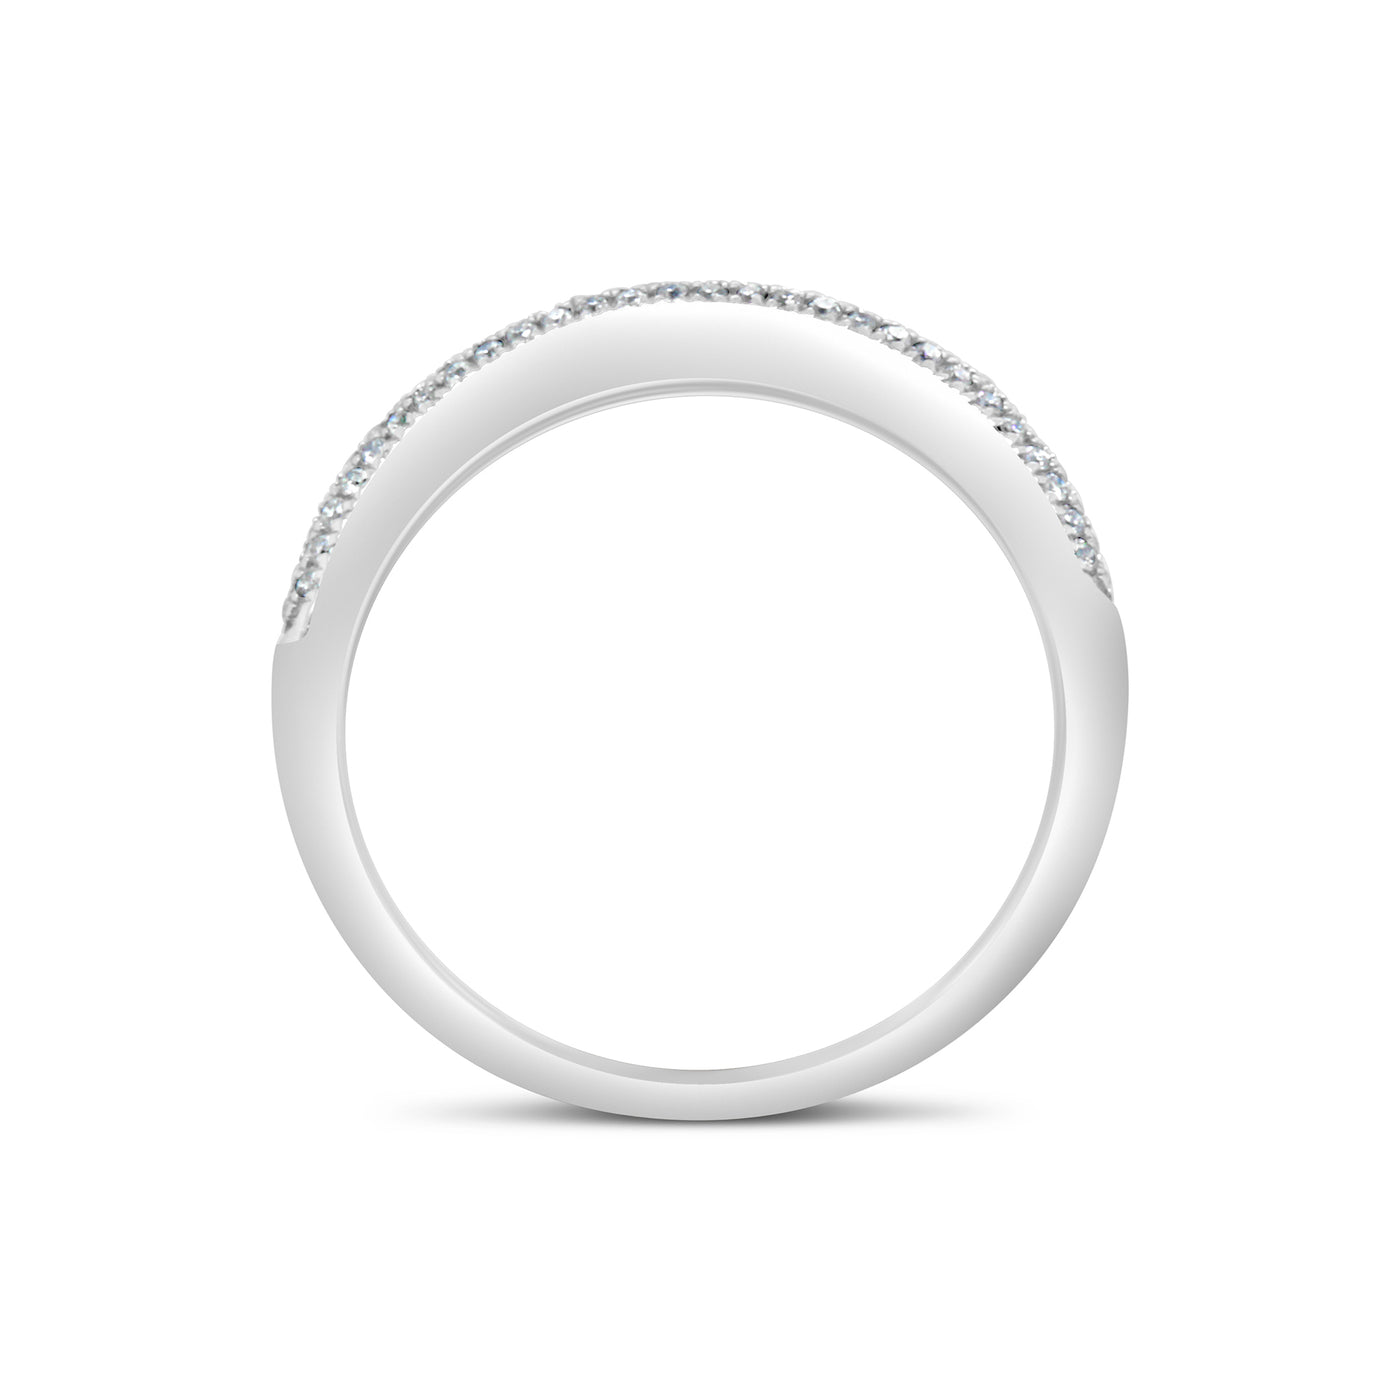 14ct Diamond Wedder or Spacer Ring